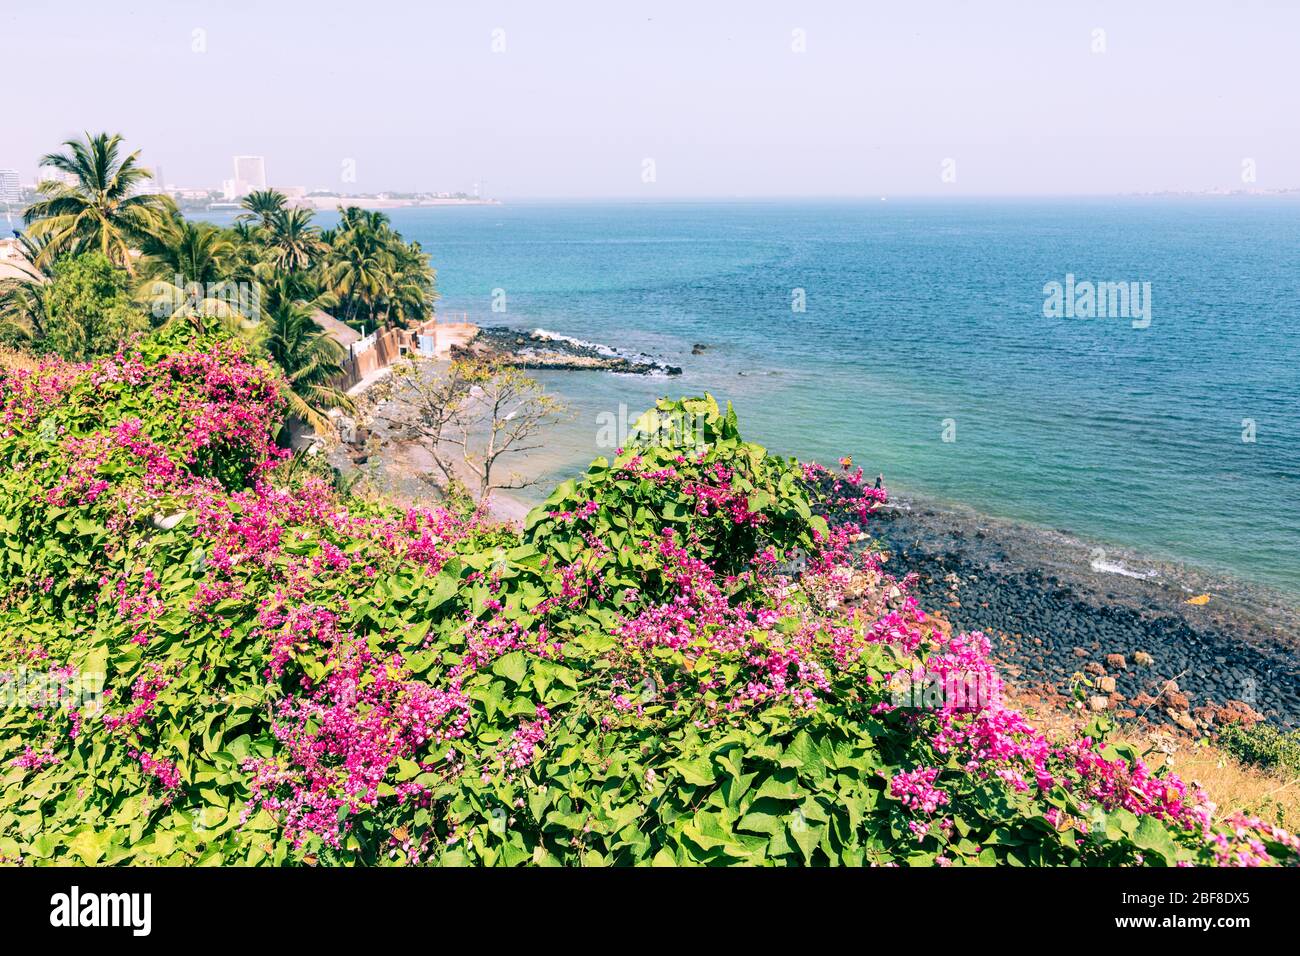 Dakar coastline, beach and vegetation. Dakar. Senegal. West Africa. Stock Photo